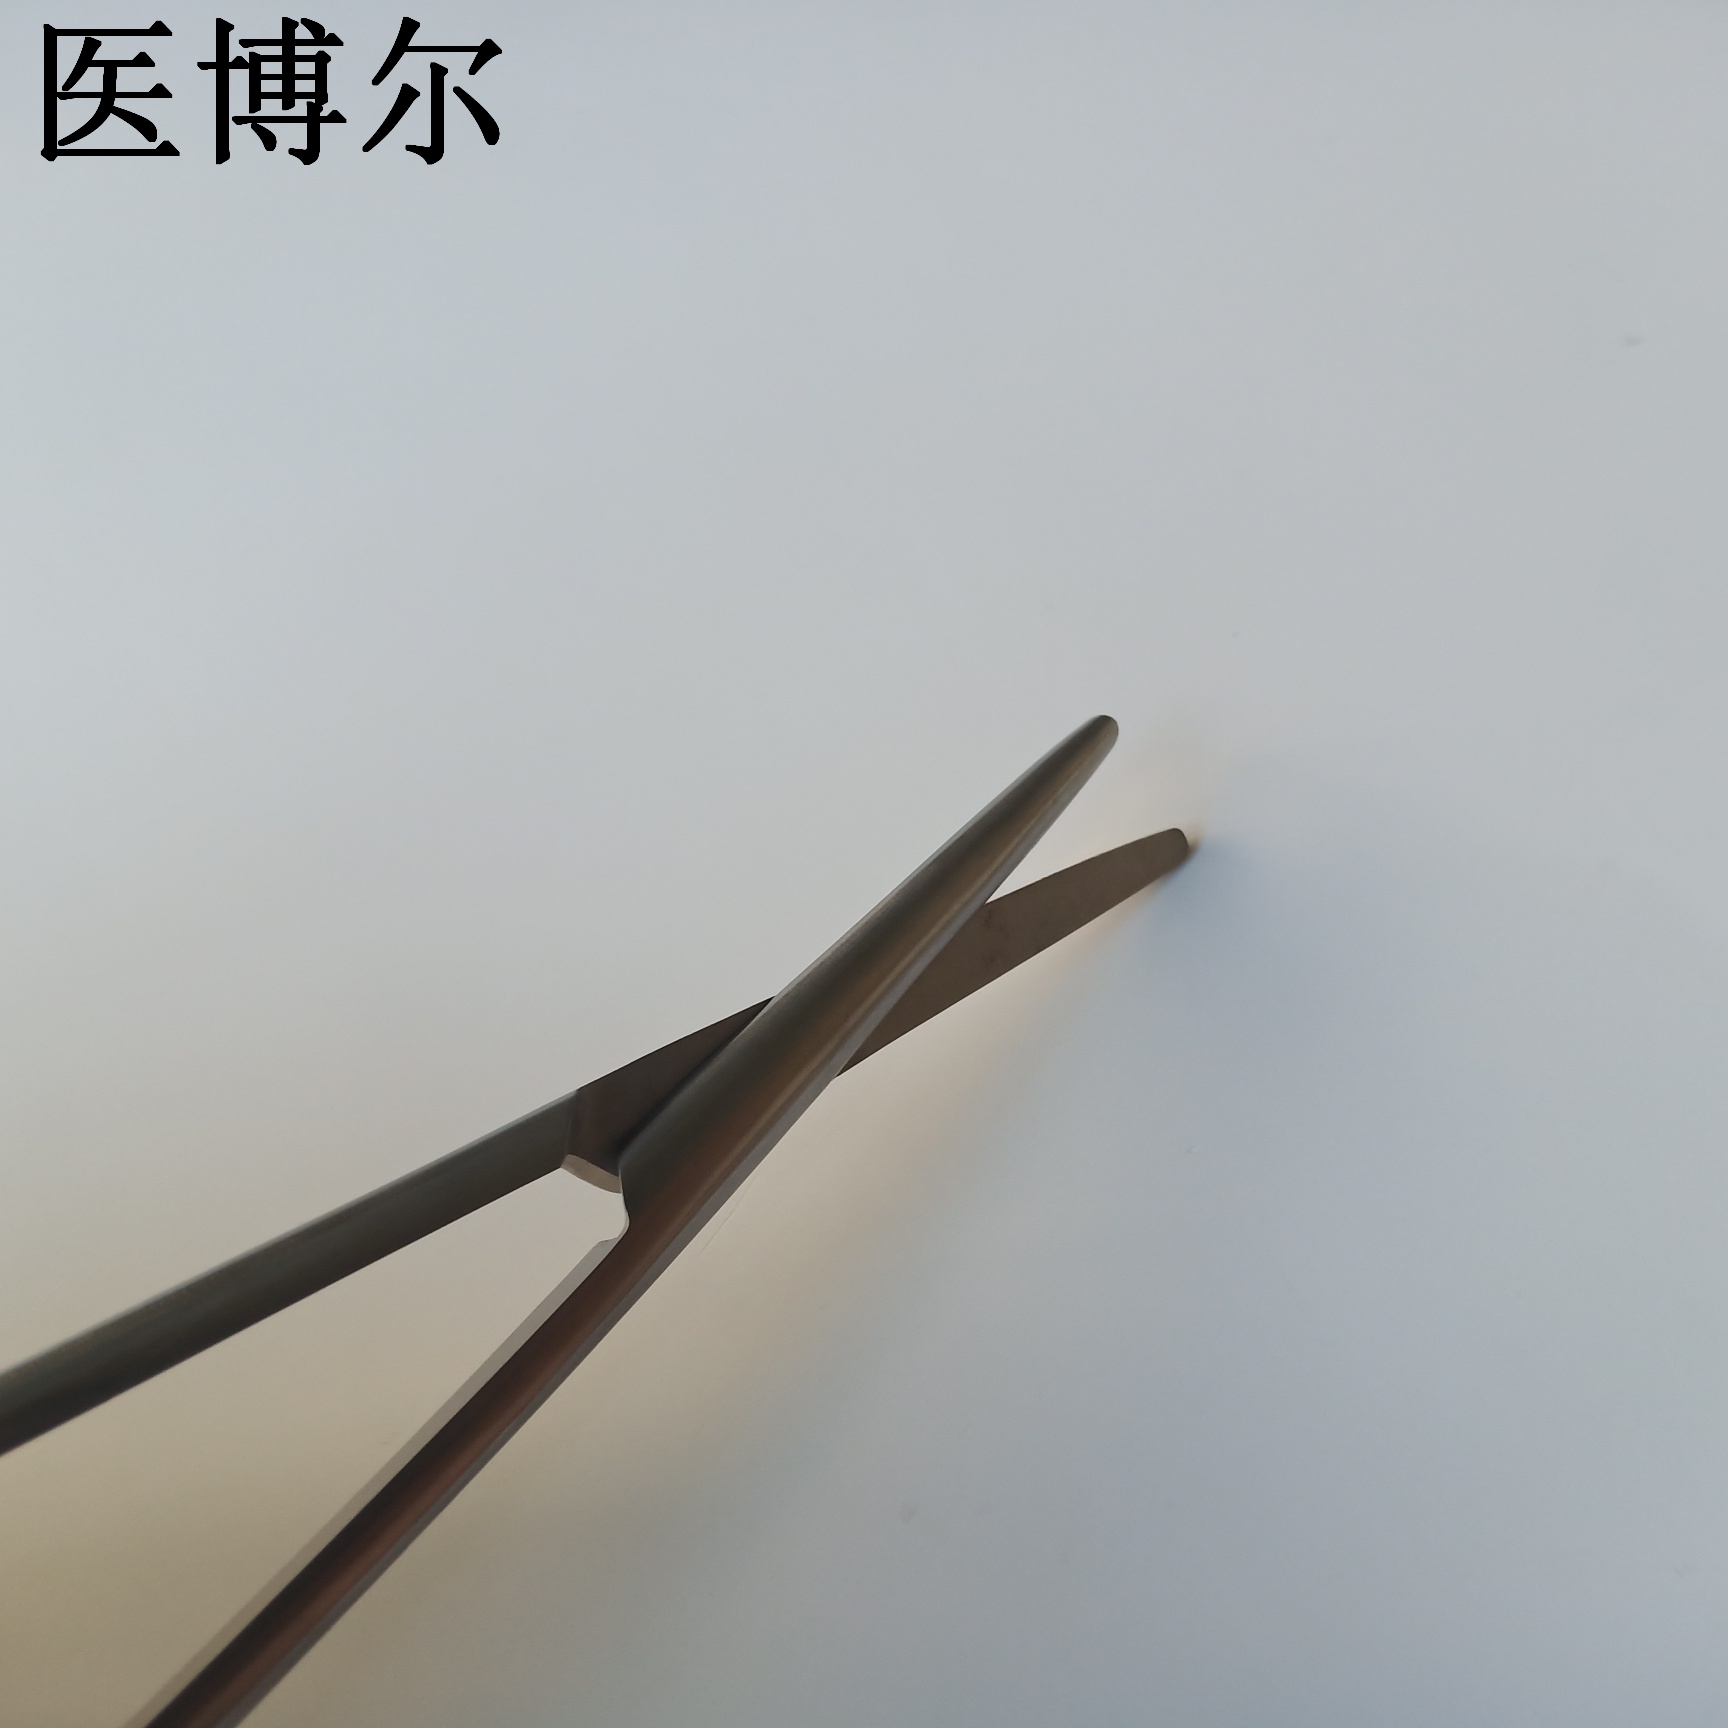 14cm精细直圆剪刀 (2).jpg